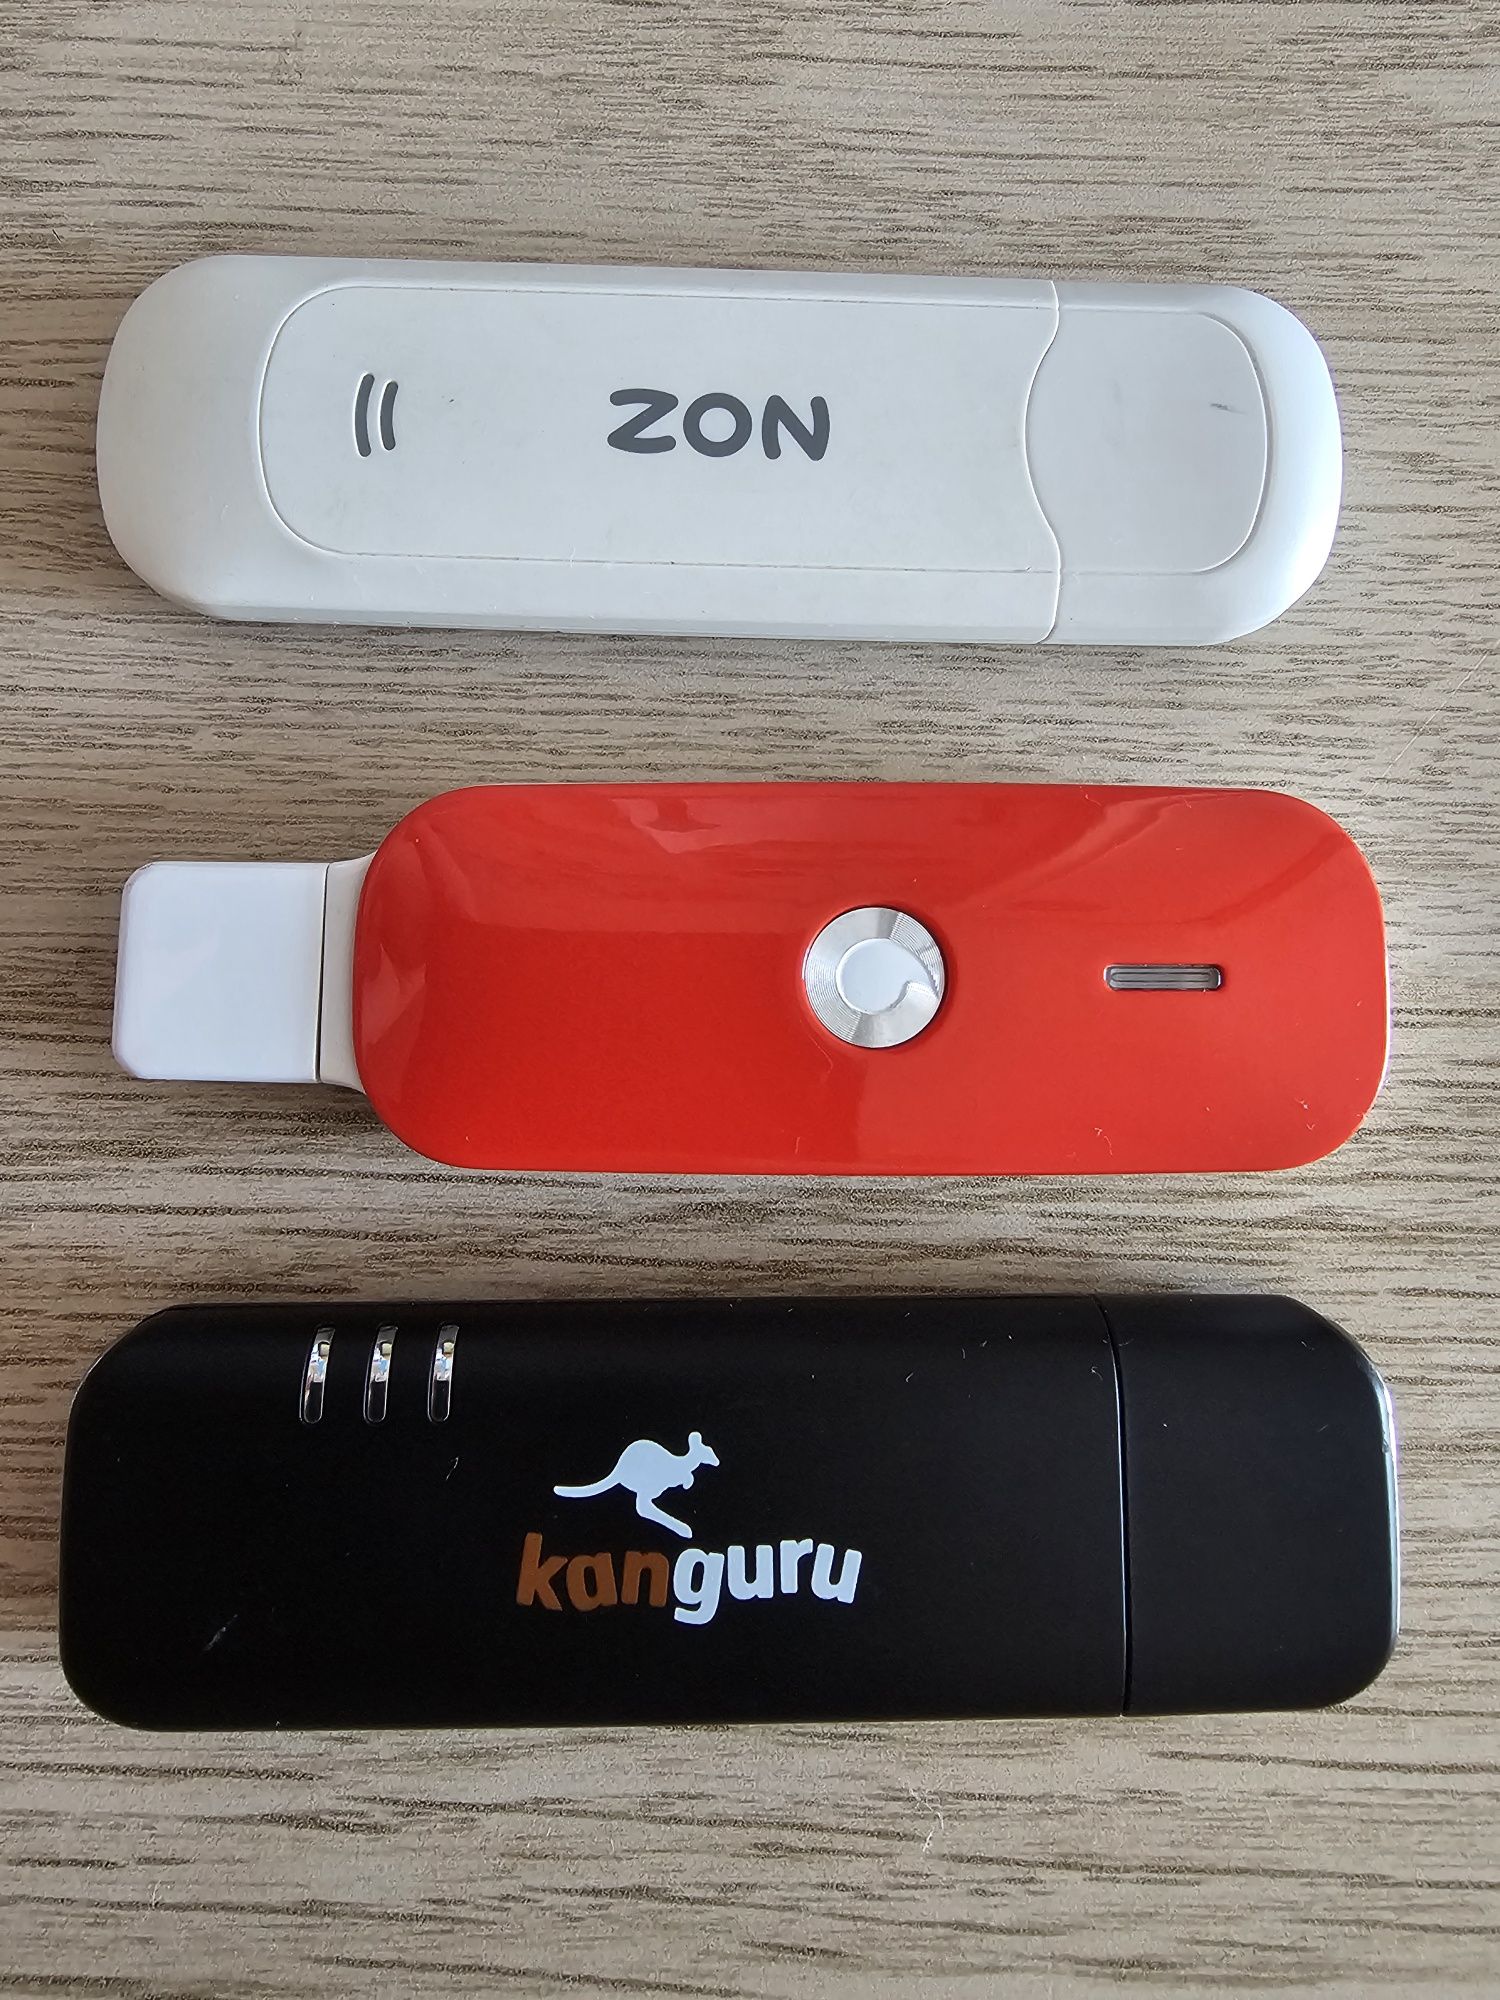 Pens Vodafone, Zon, Kanguru